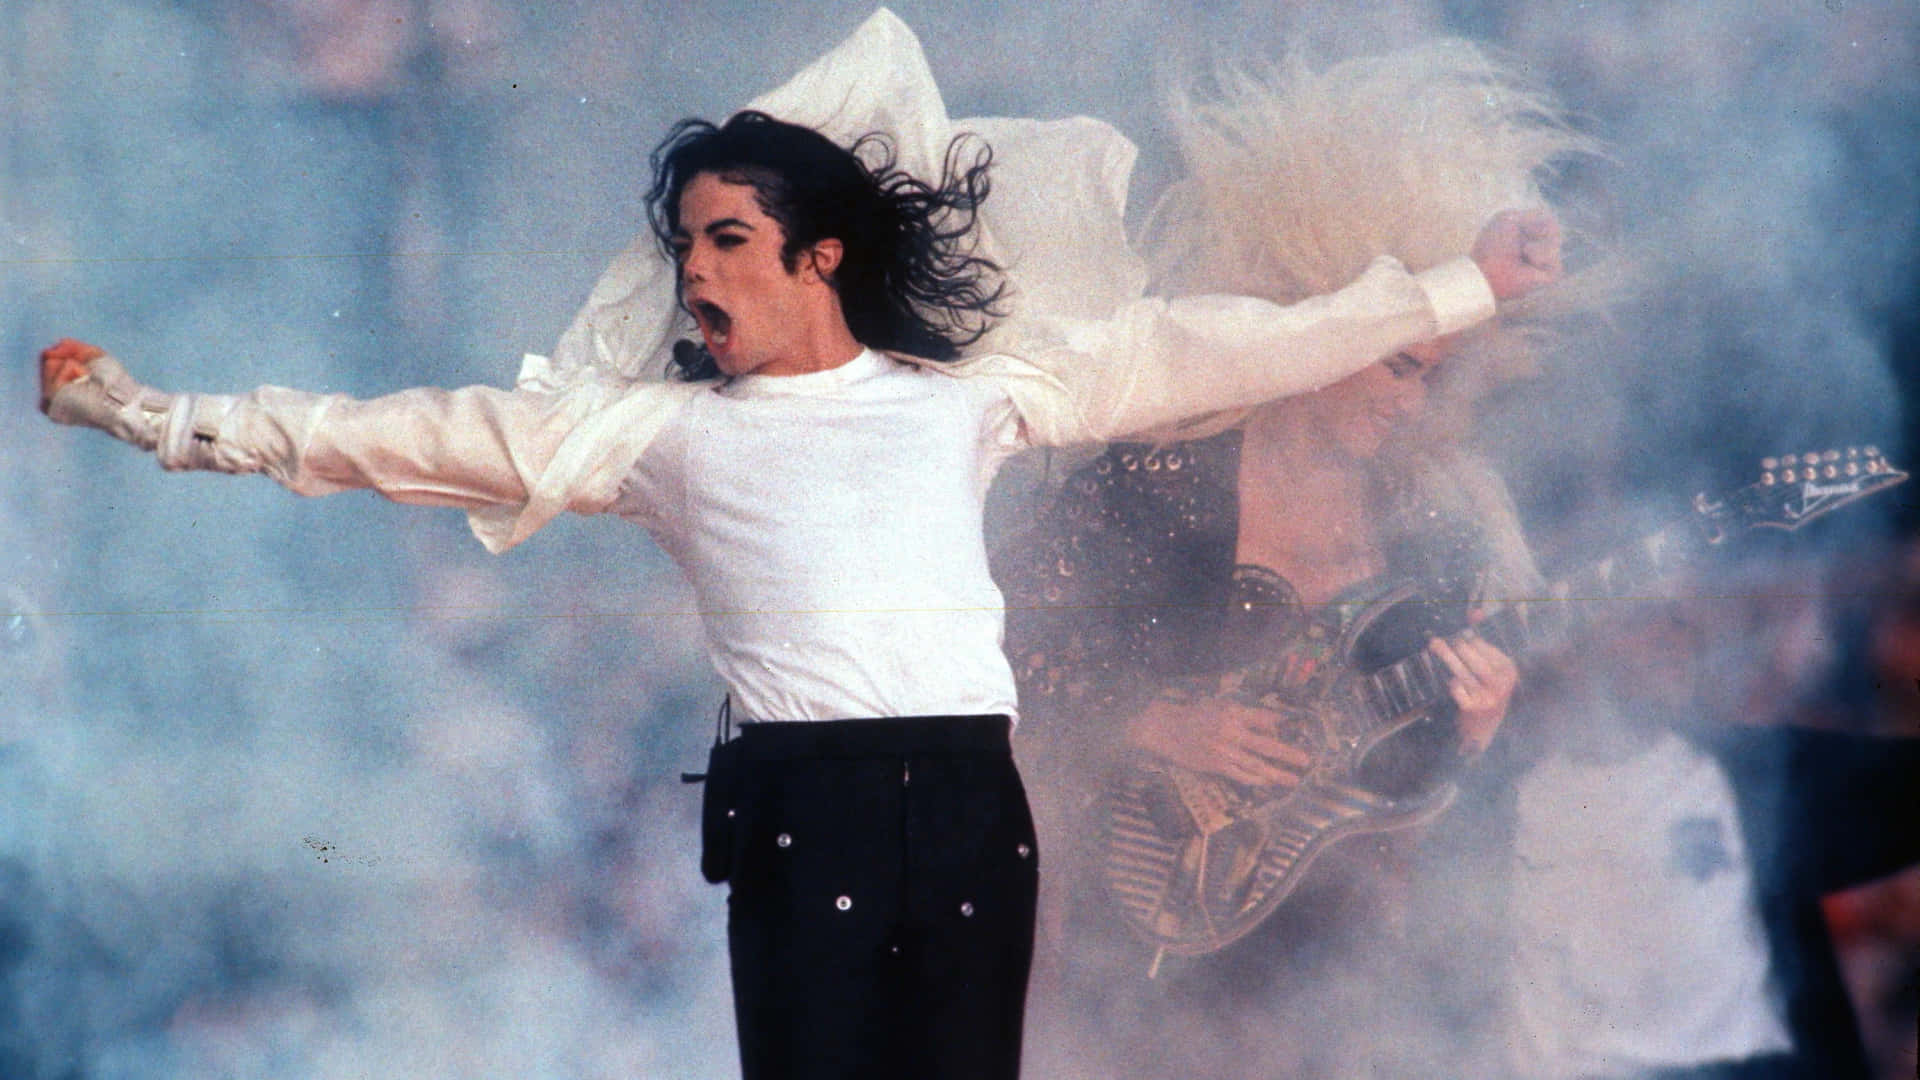 Michael Jackson in iconic Thriller pose